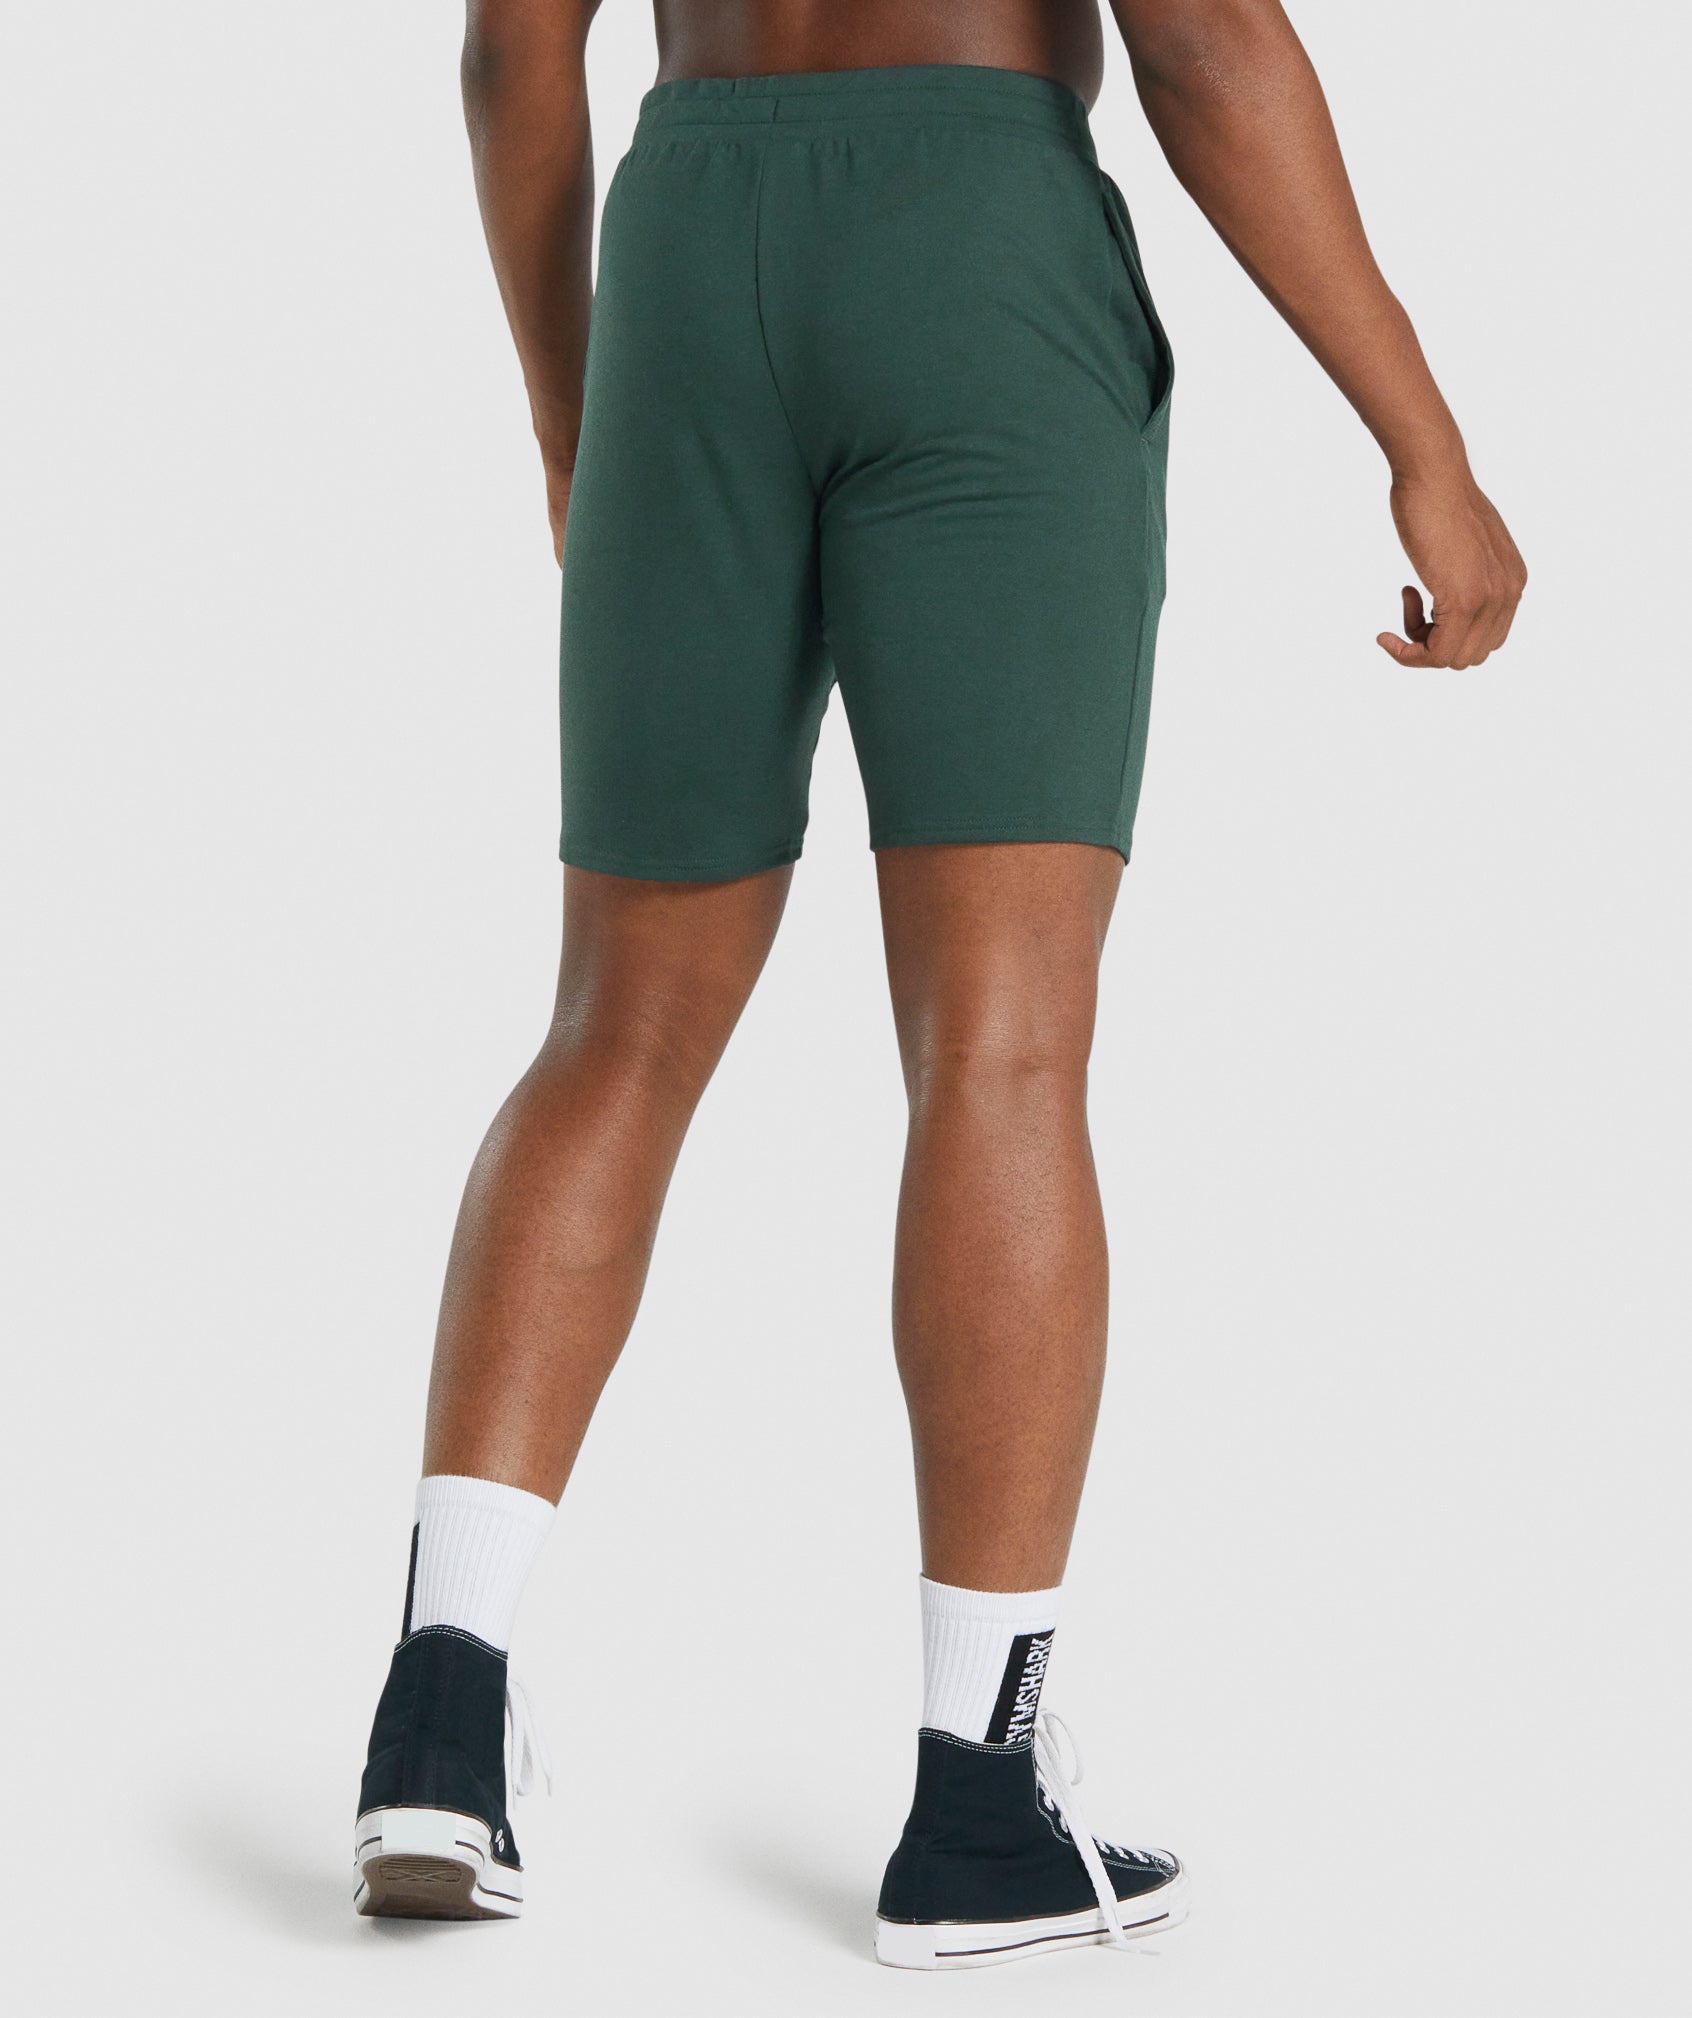 Gymshark Arrival Shorts - Dark Green